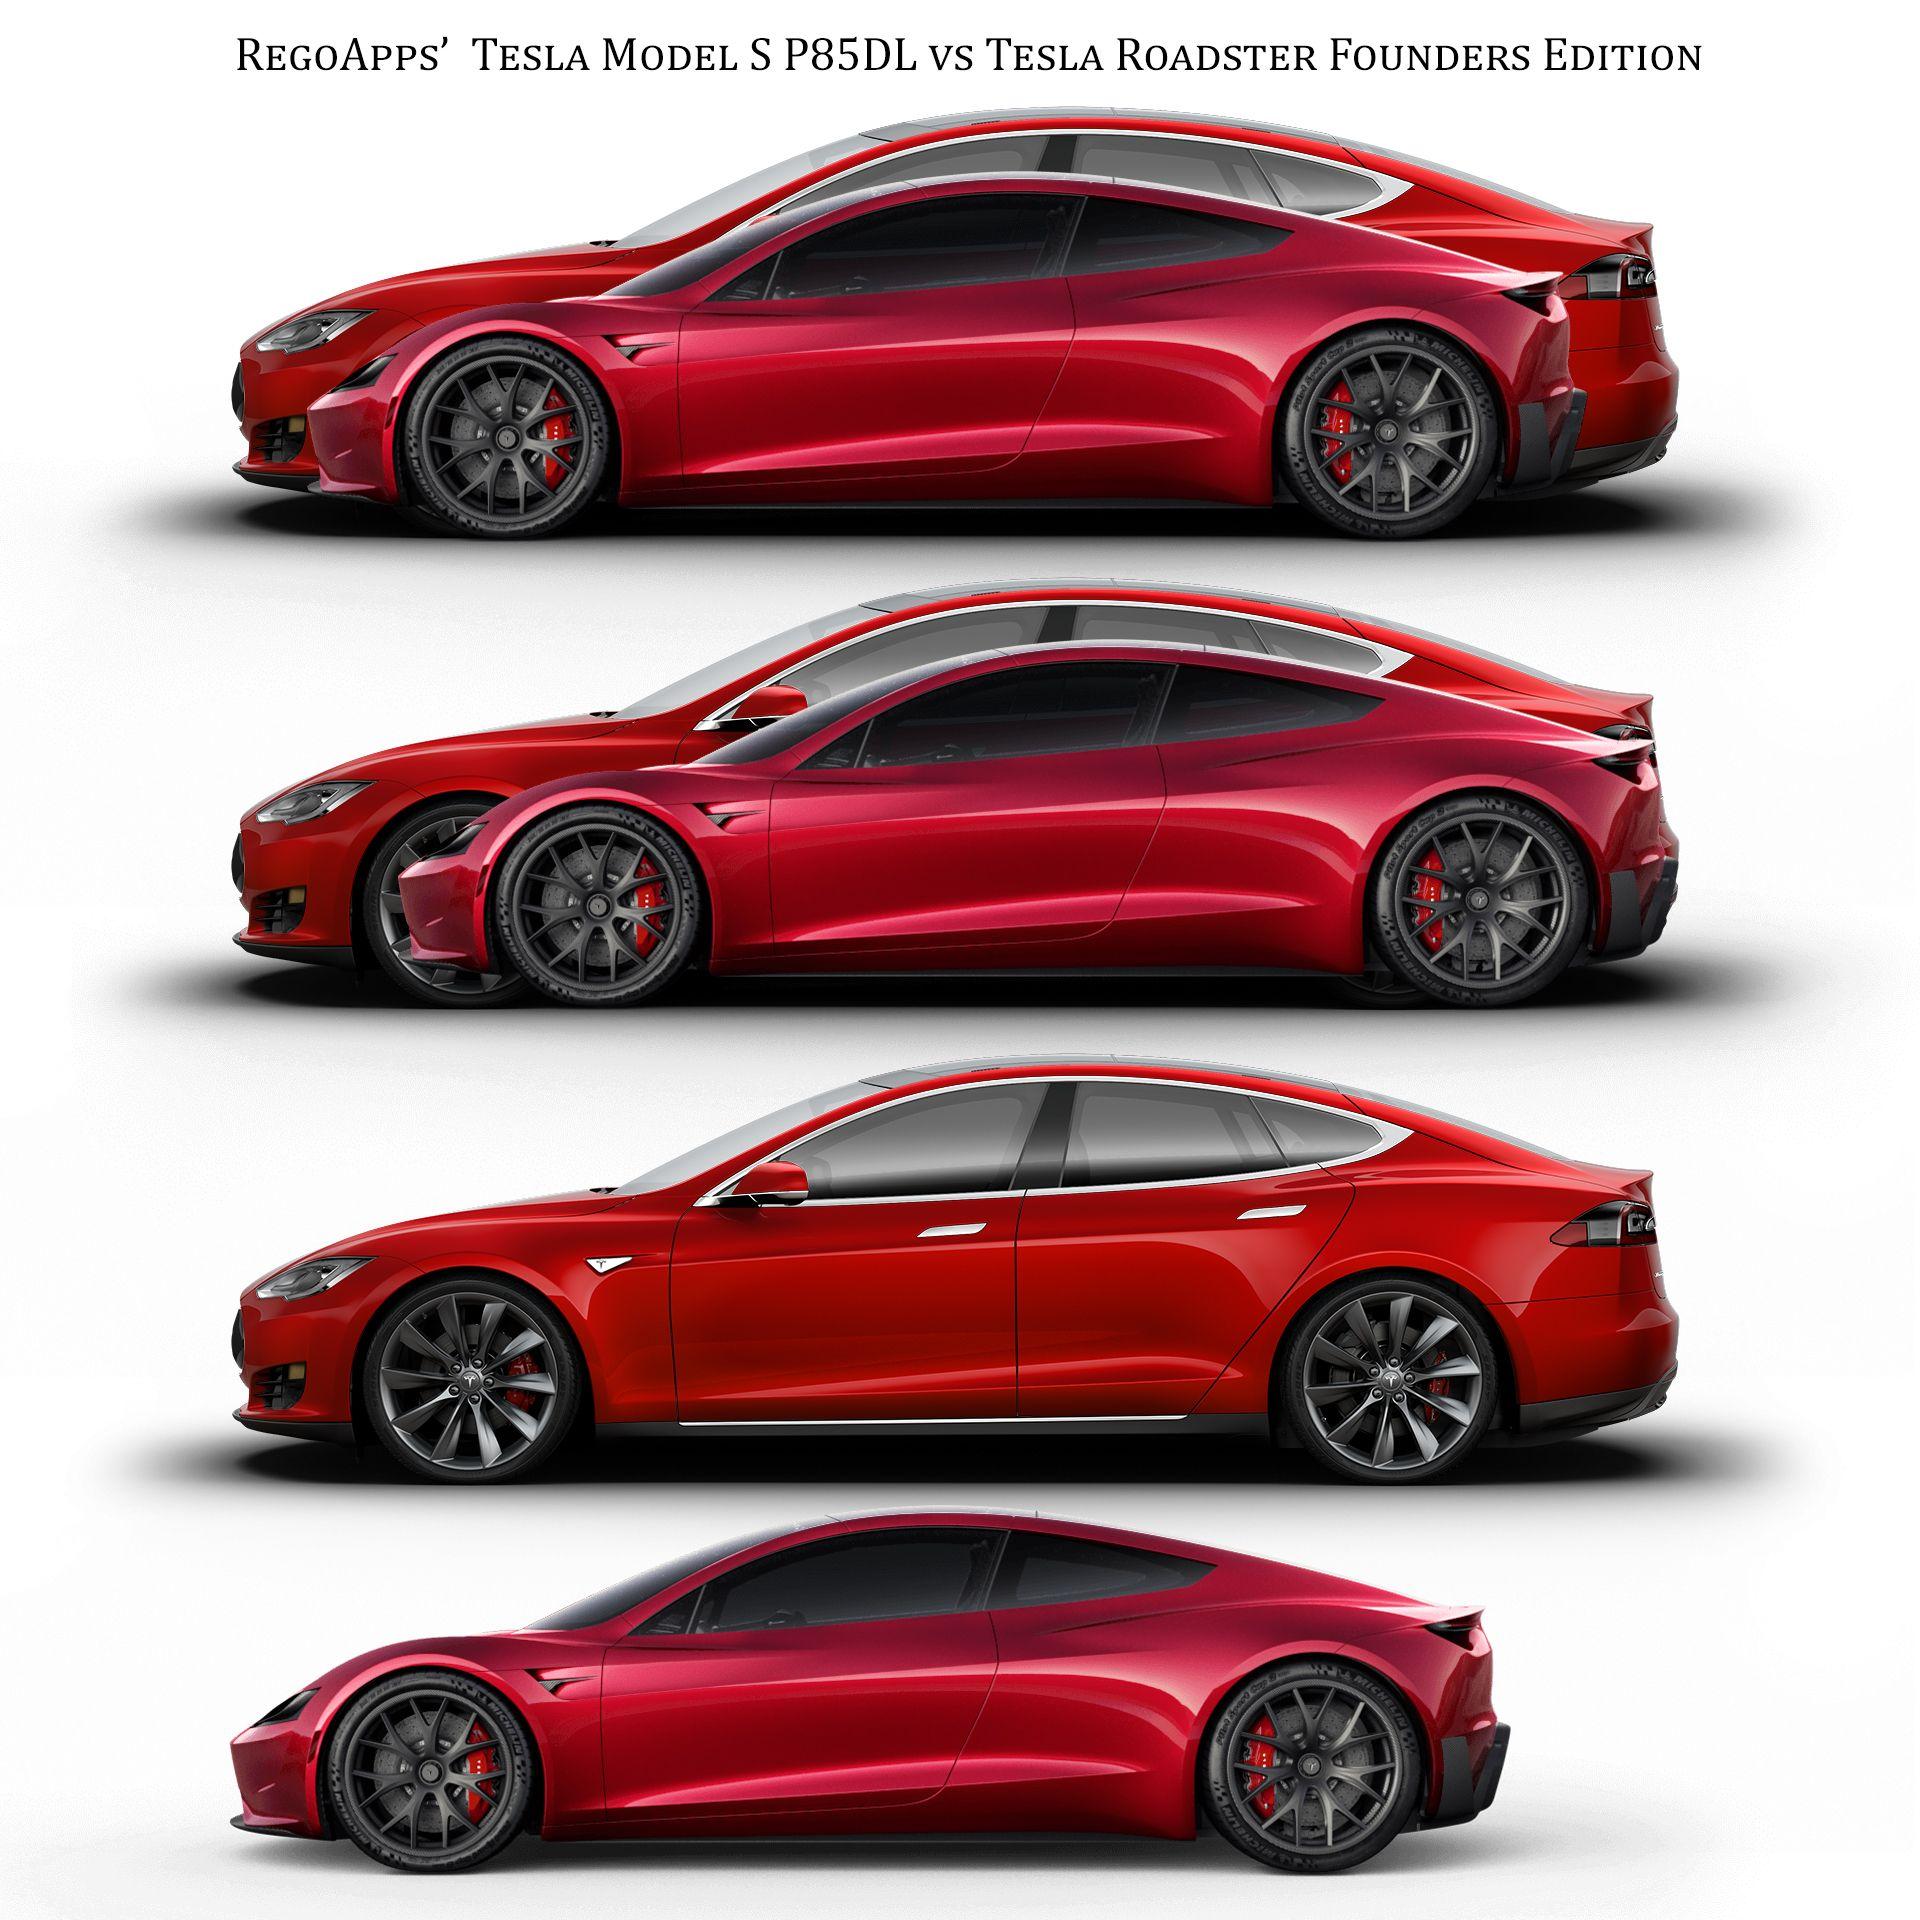 Tesla Roadster Logo - Tesla Roadster vs Model S size comparison : teslamotors